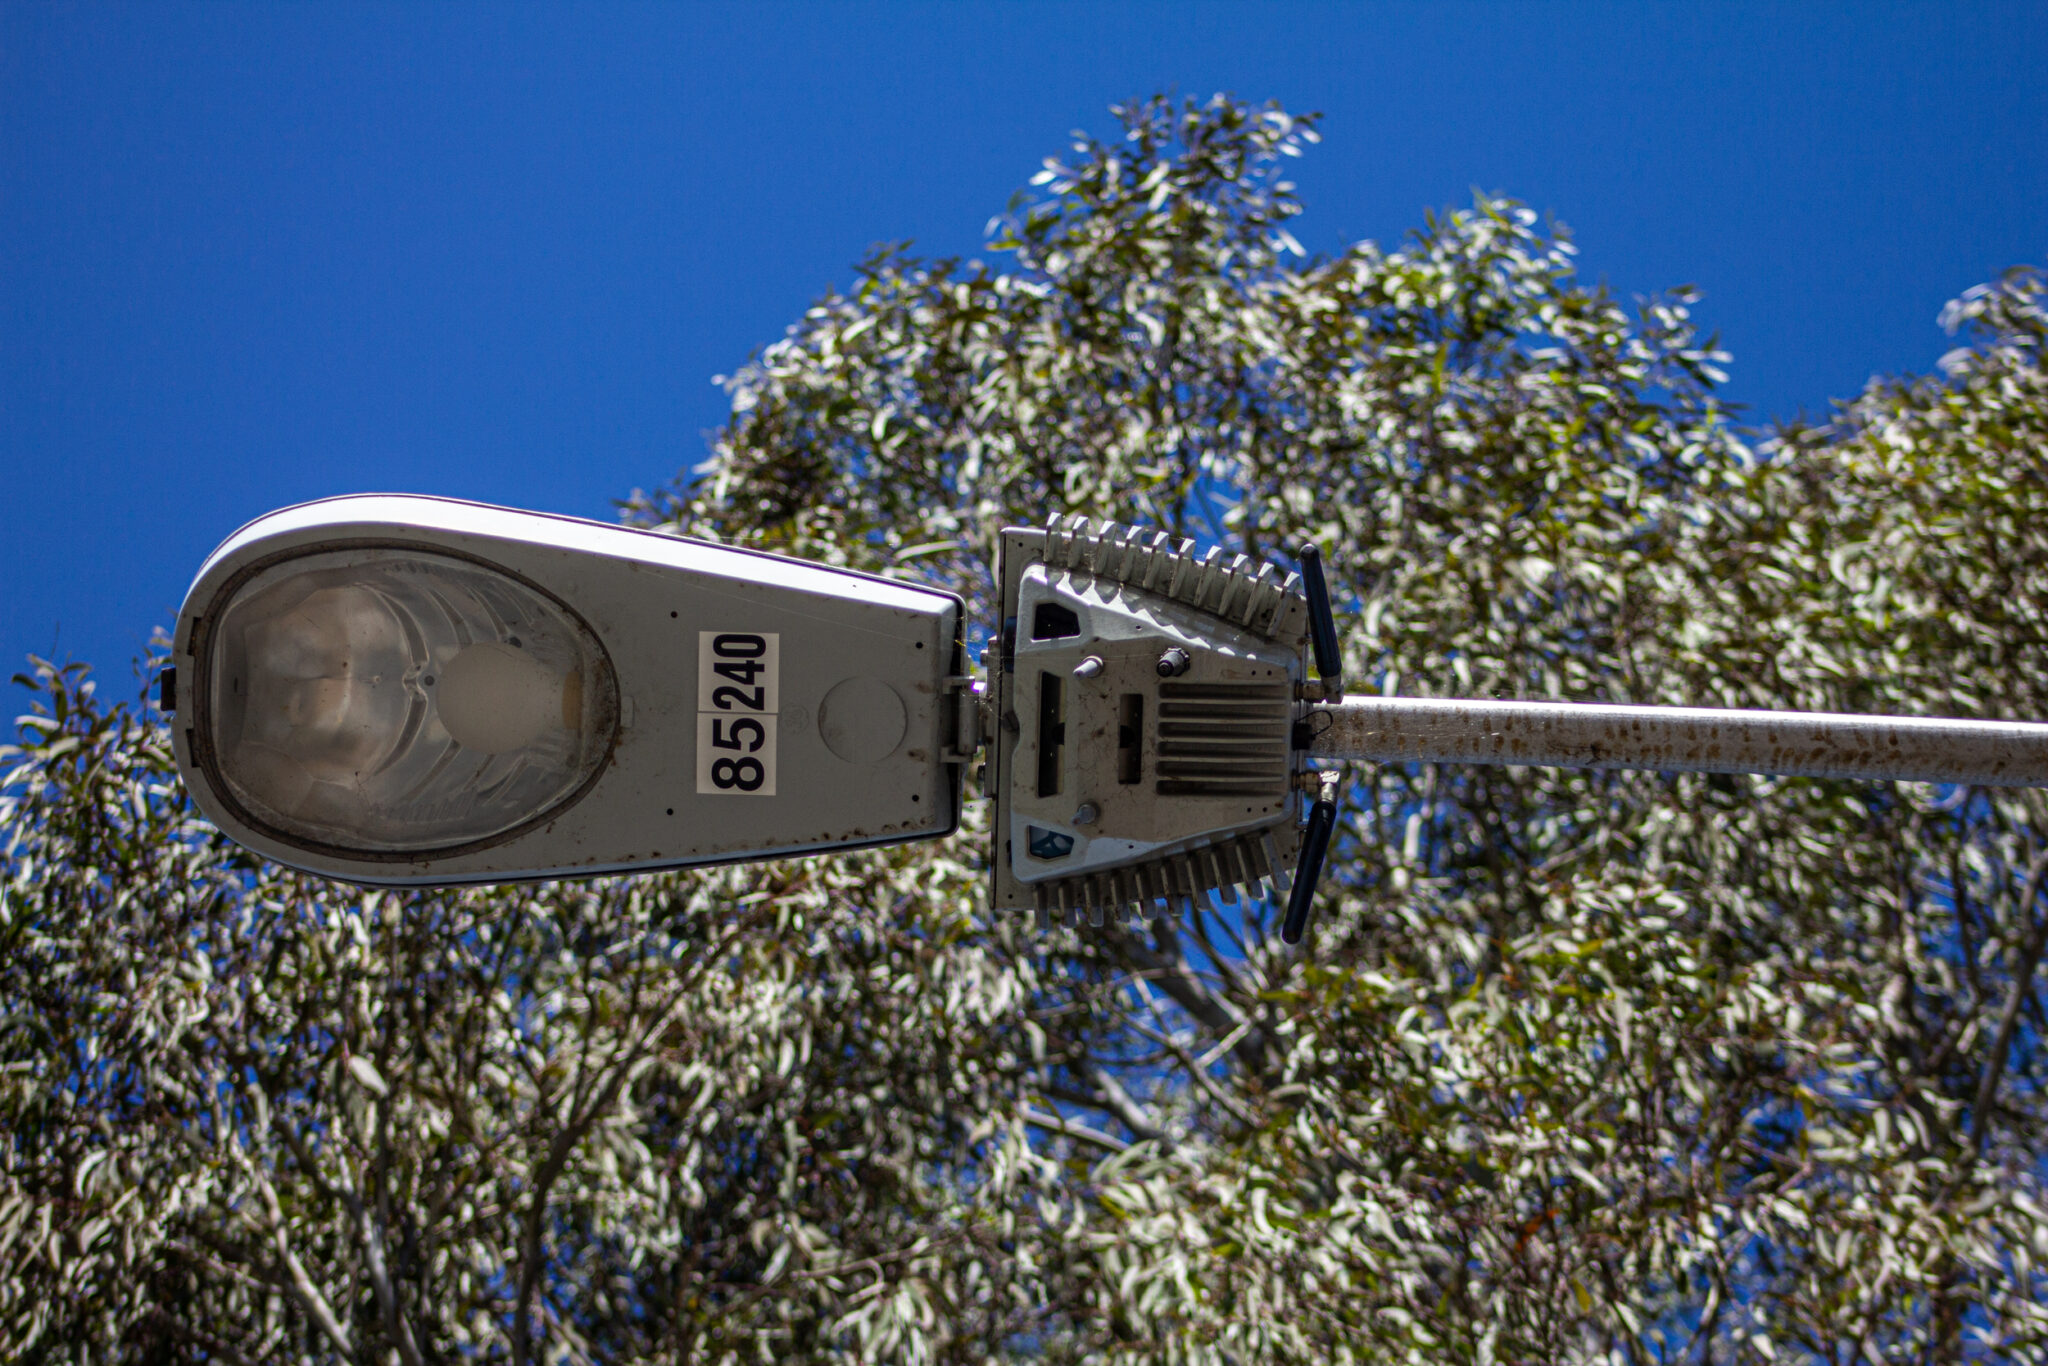 A streetlight camera